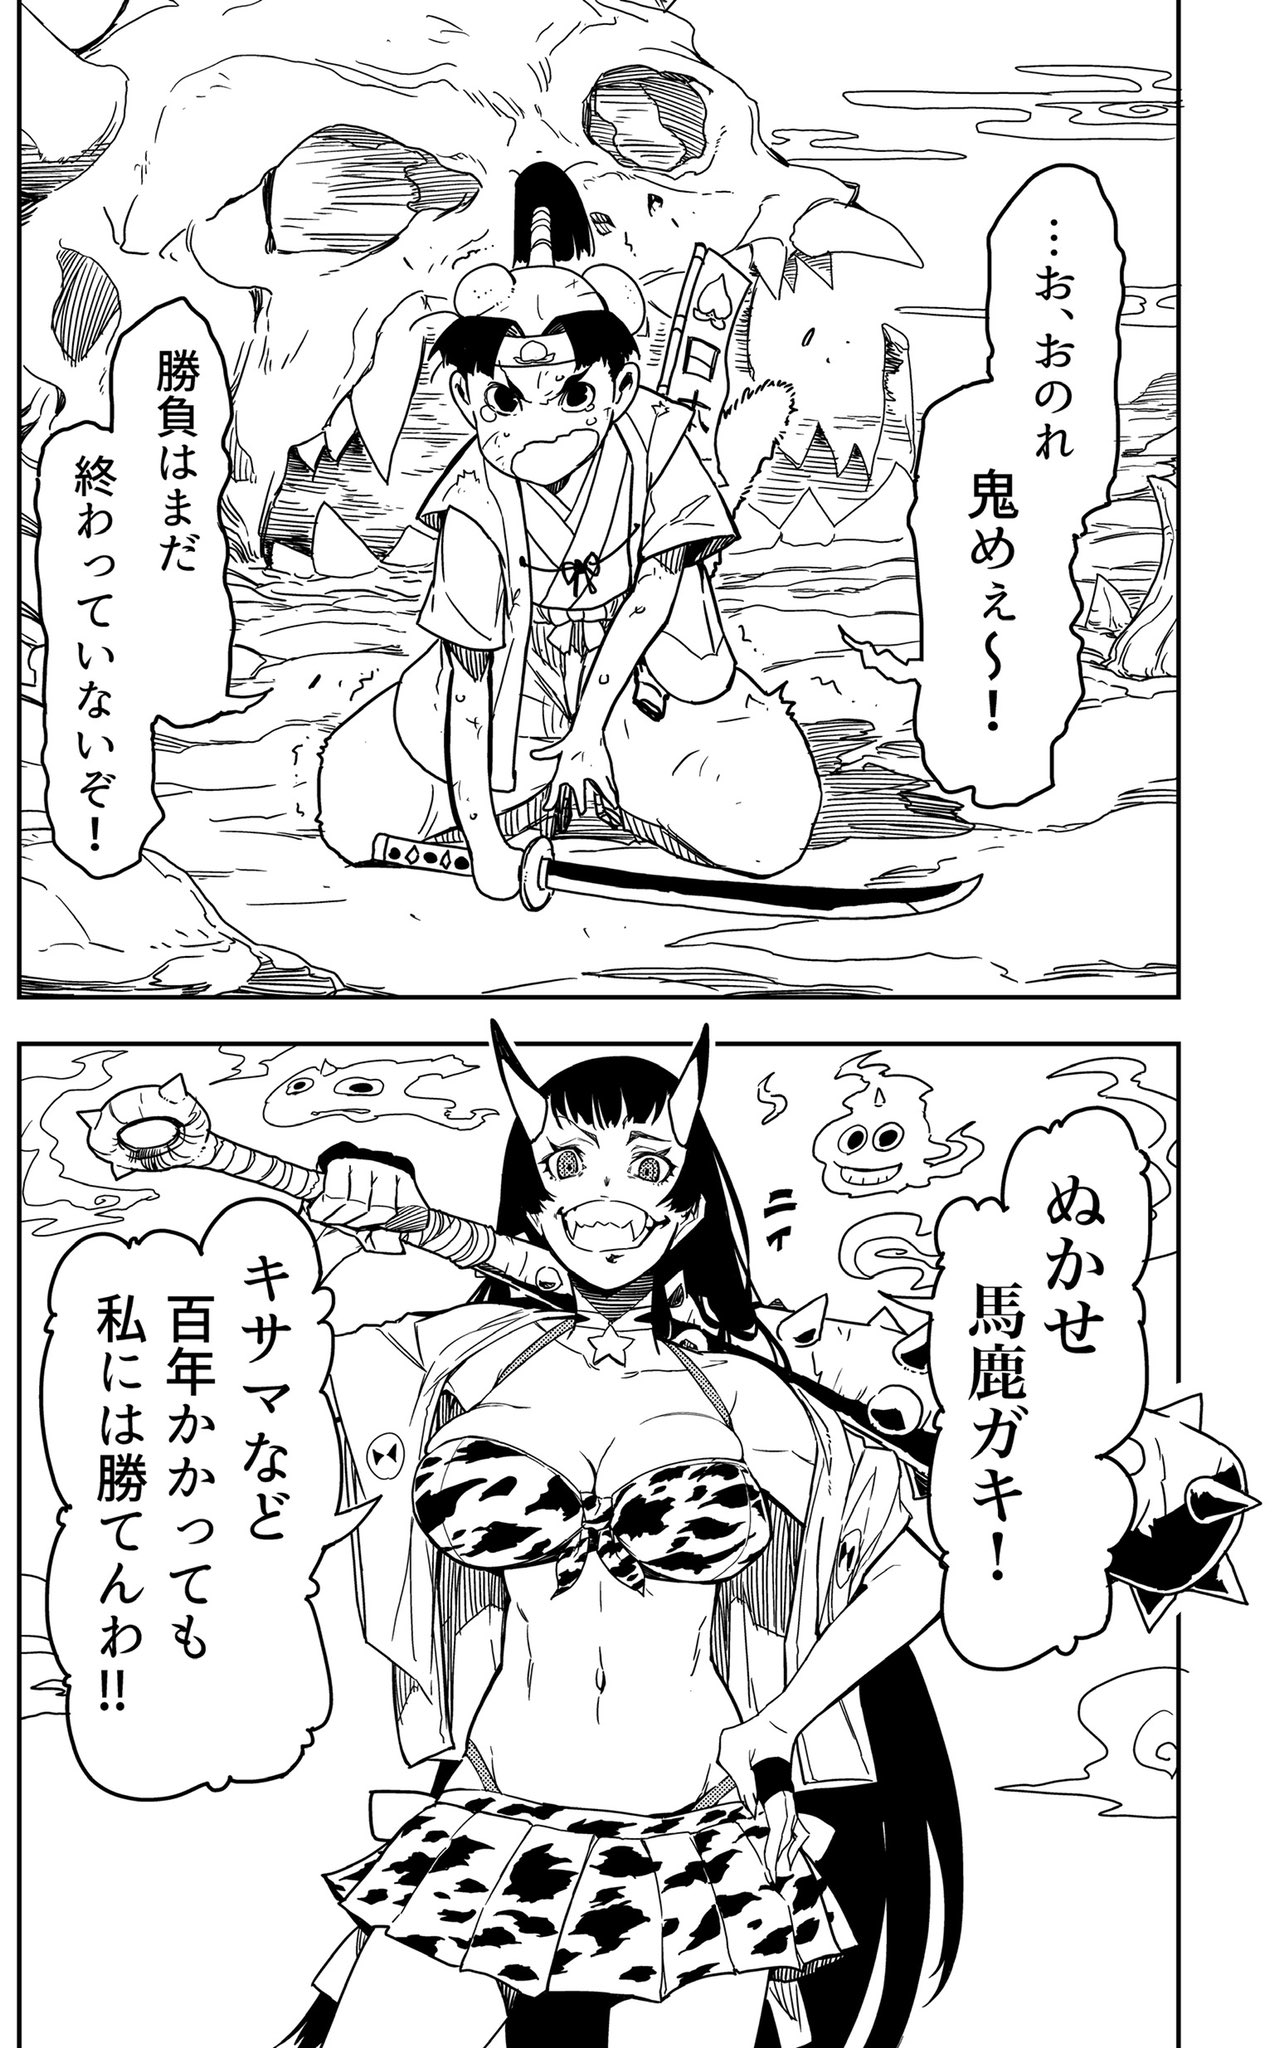 Momotarou and the Crimson Demon manga